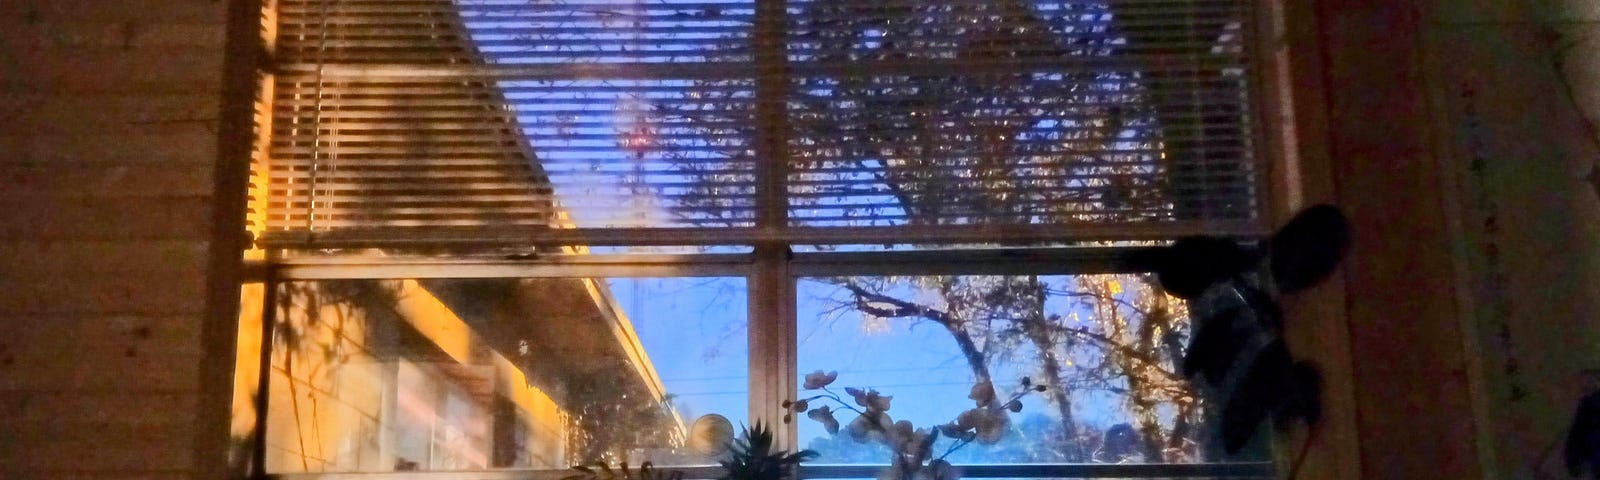 A window blazes with flourescent light at twilight.